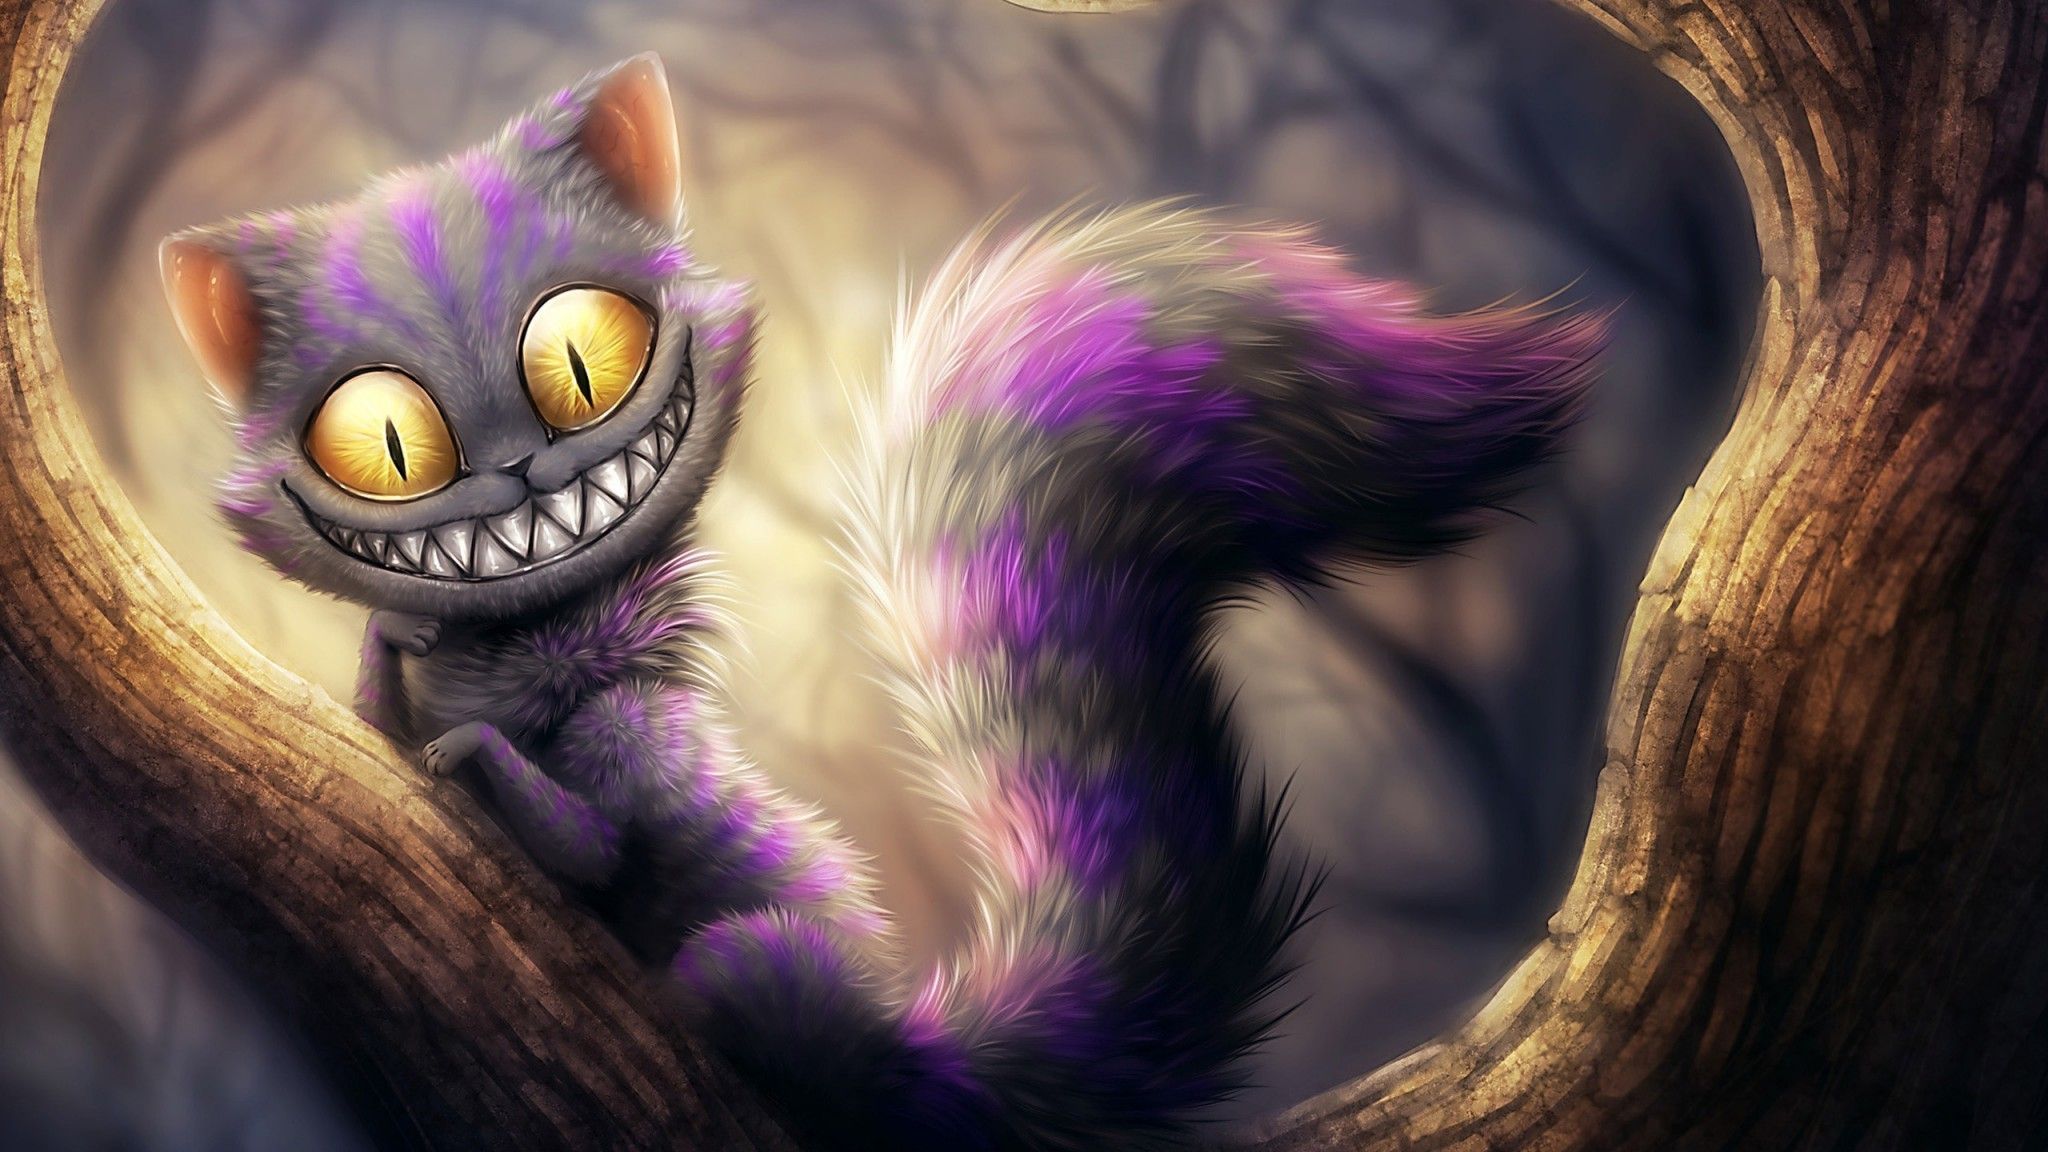 Evil Cheshire Cat Wallpaper image .com